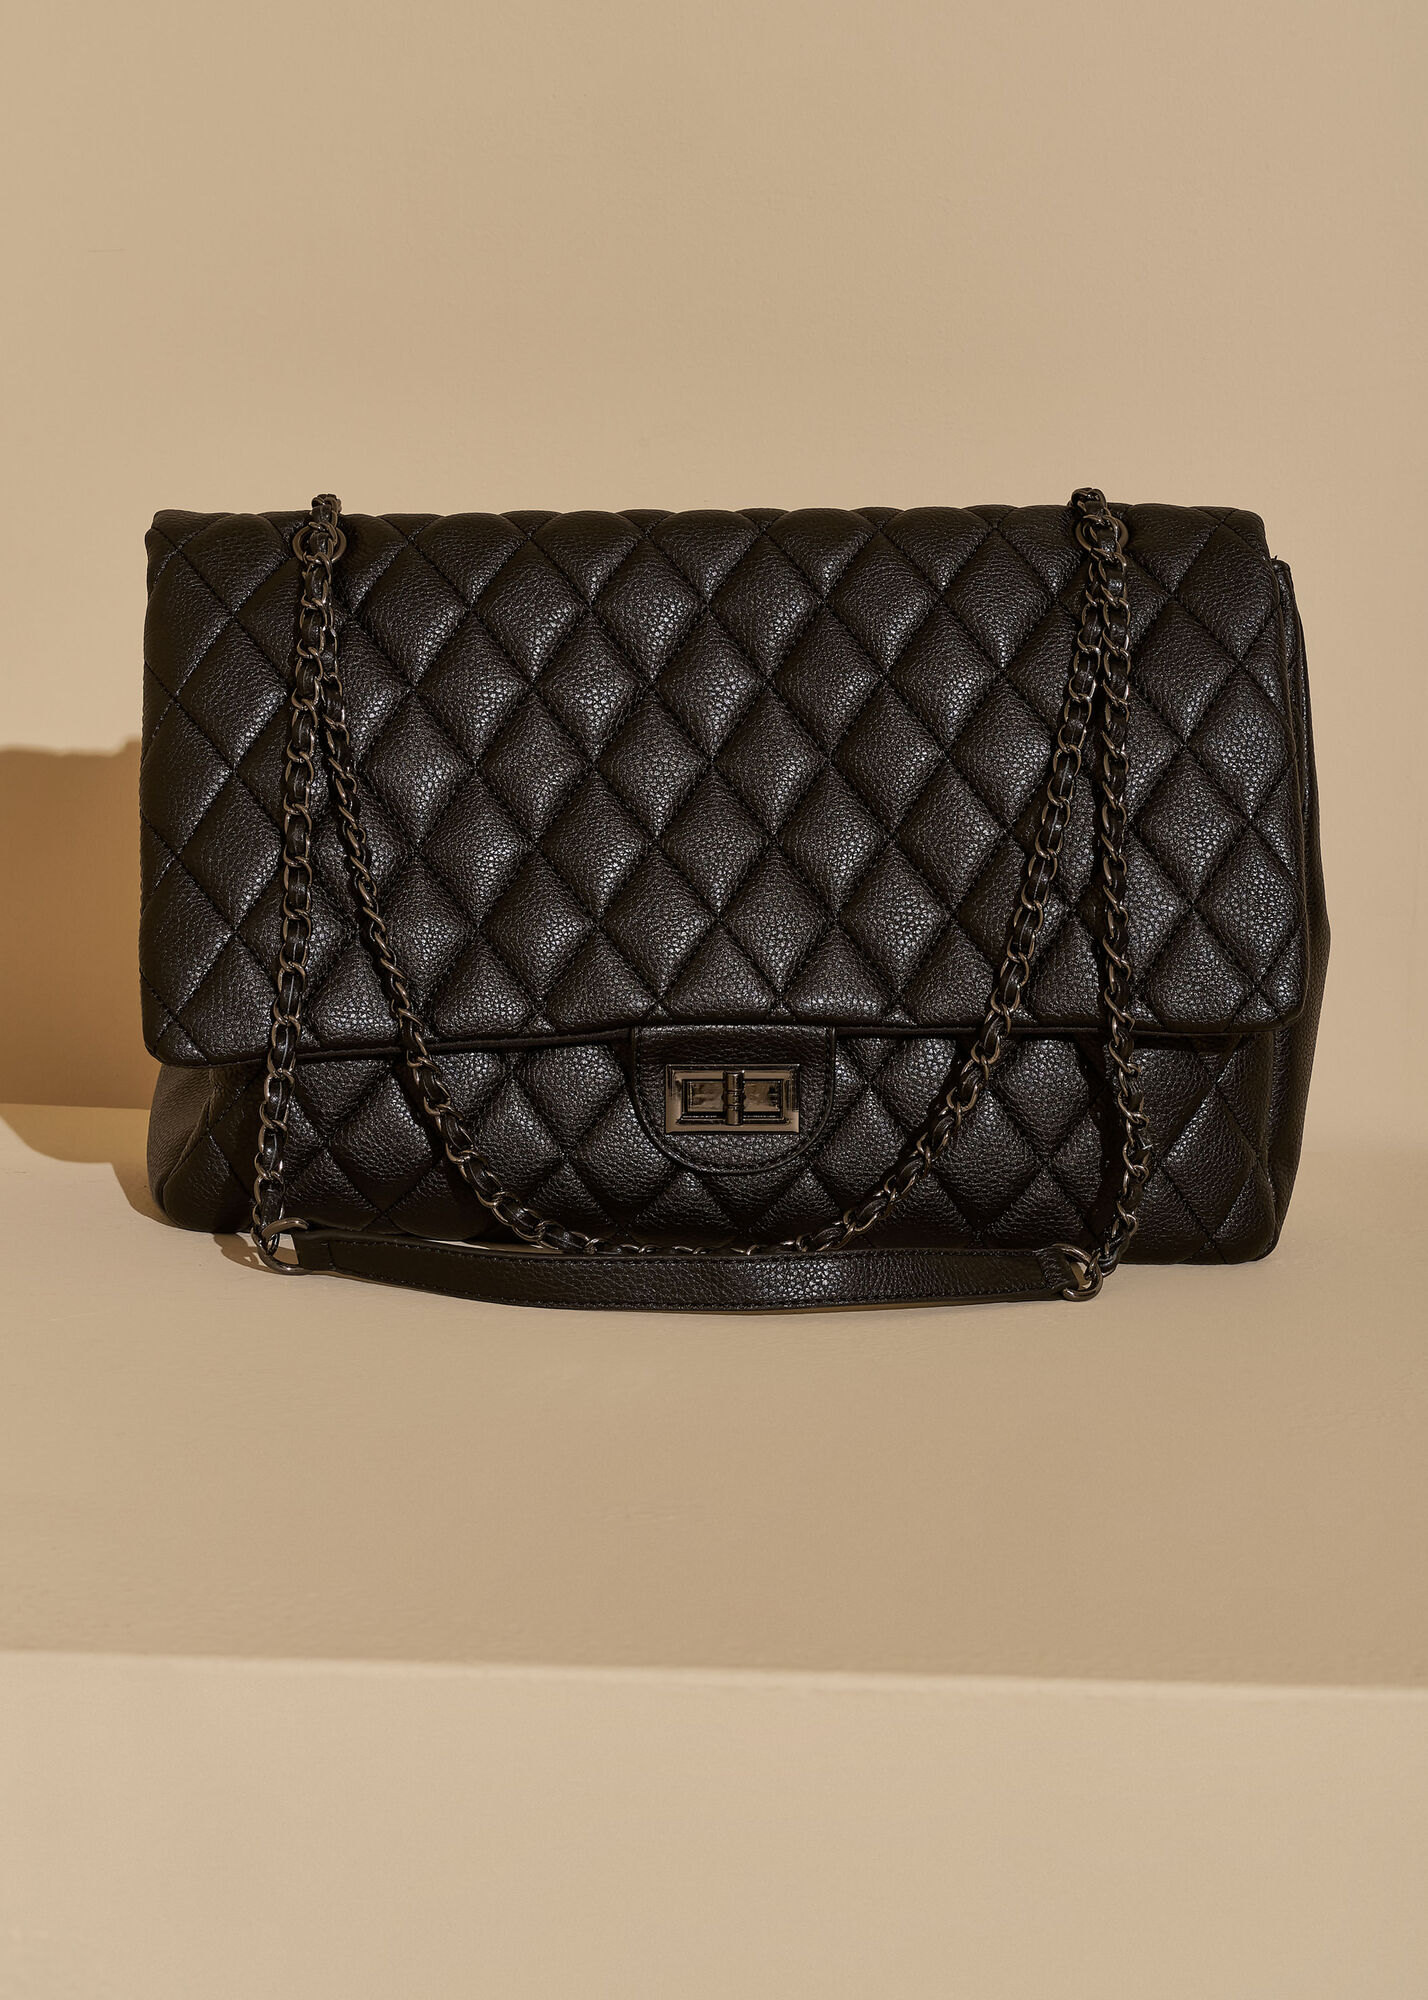 Black leather flap purse